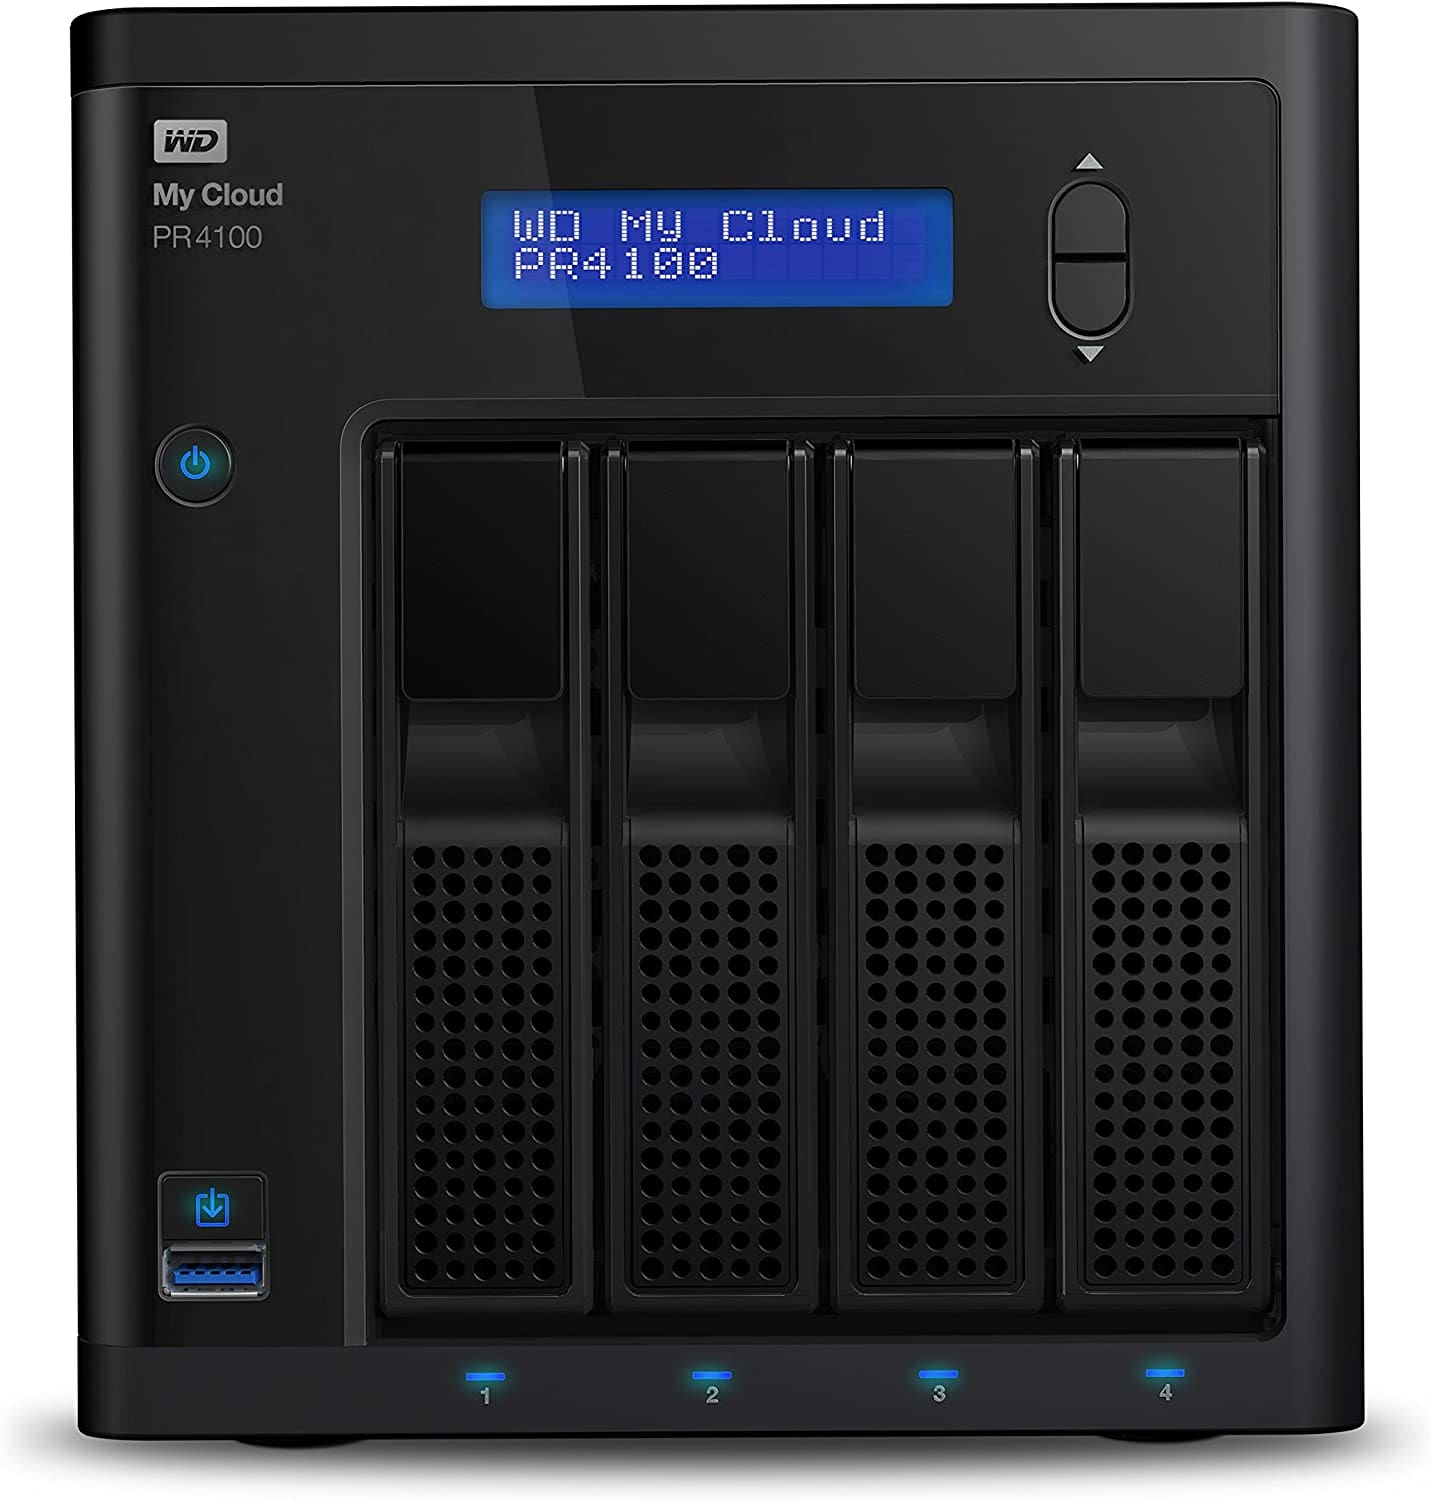 My Cloud Pro Series PR4100 best NAS storage from WD